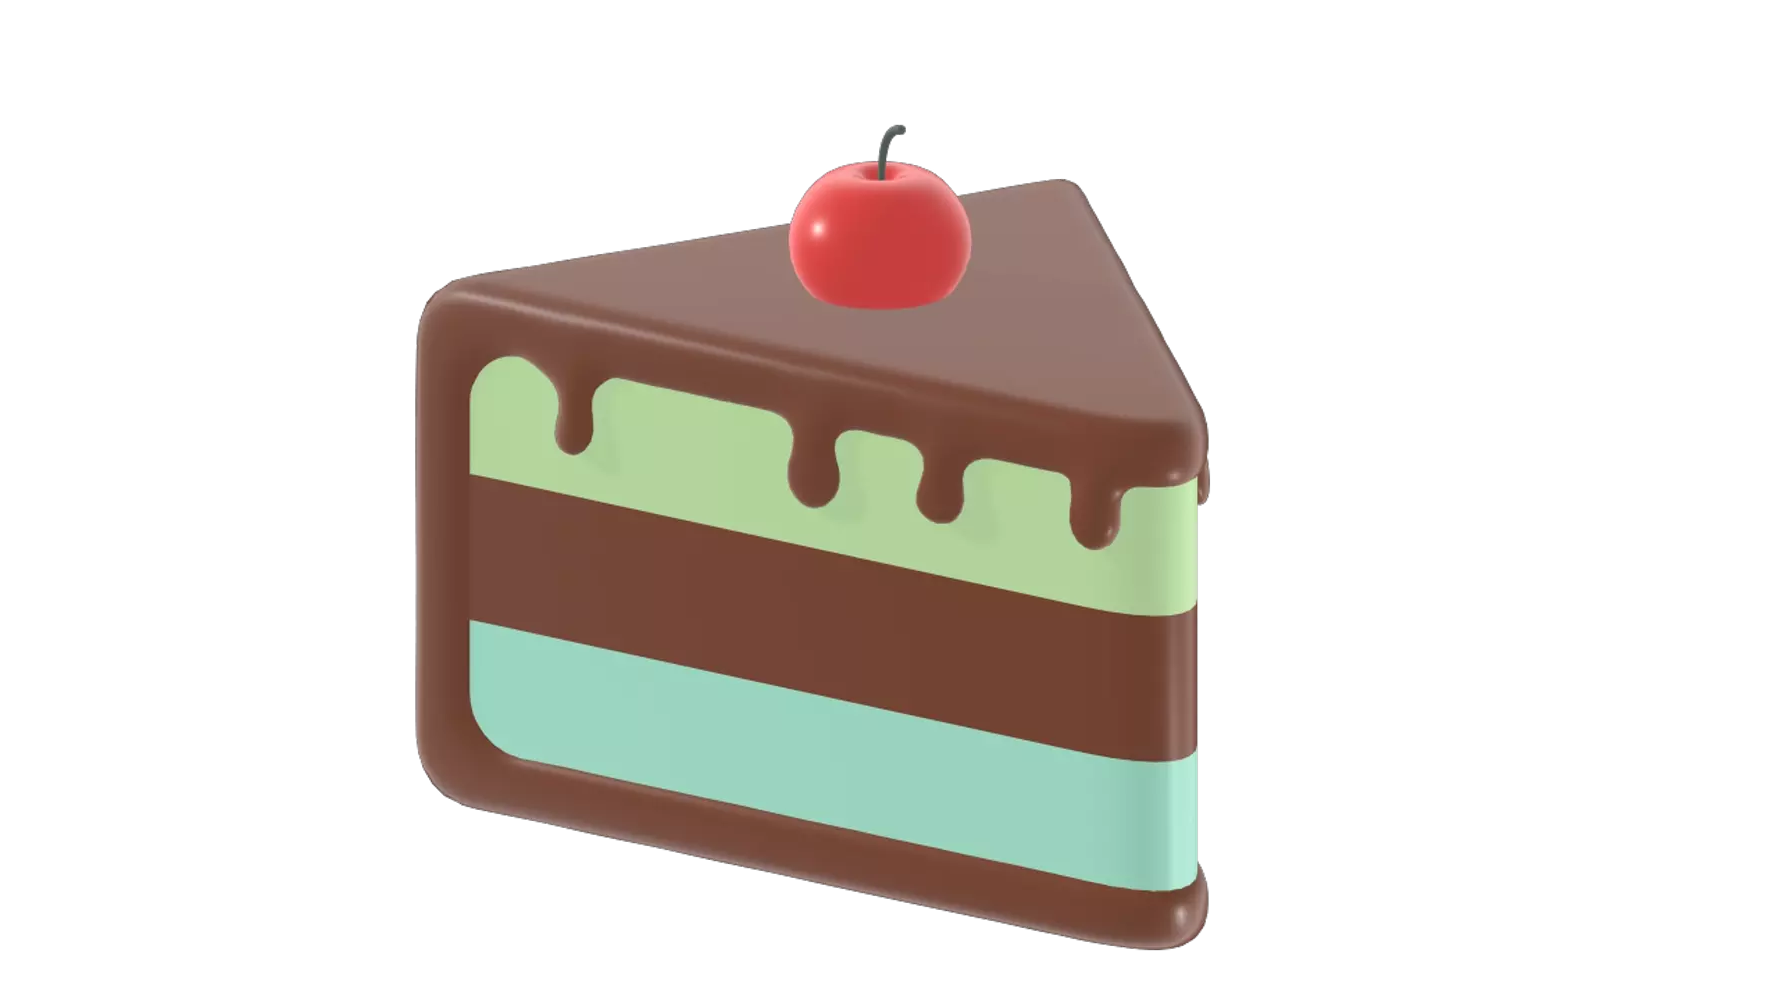 Slice of Cake 3D Graphic